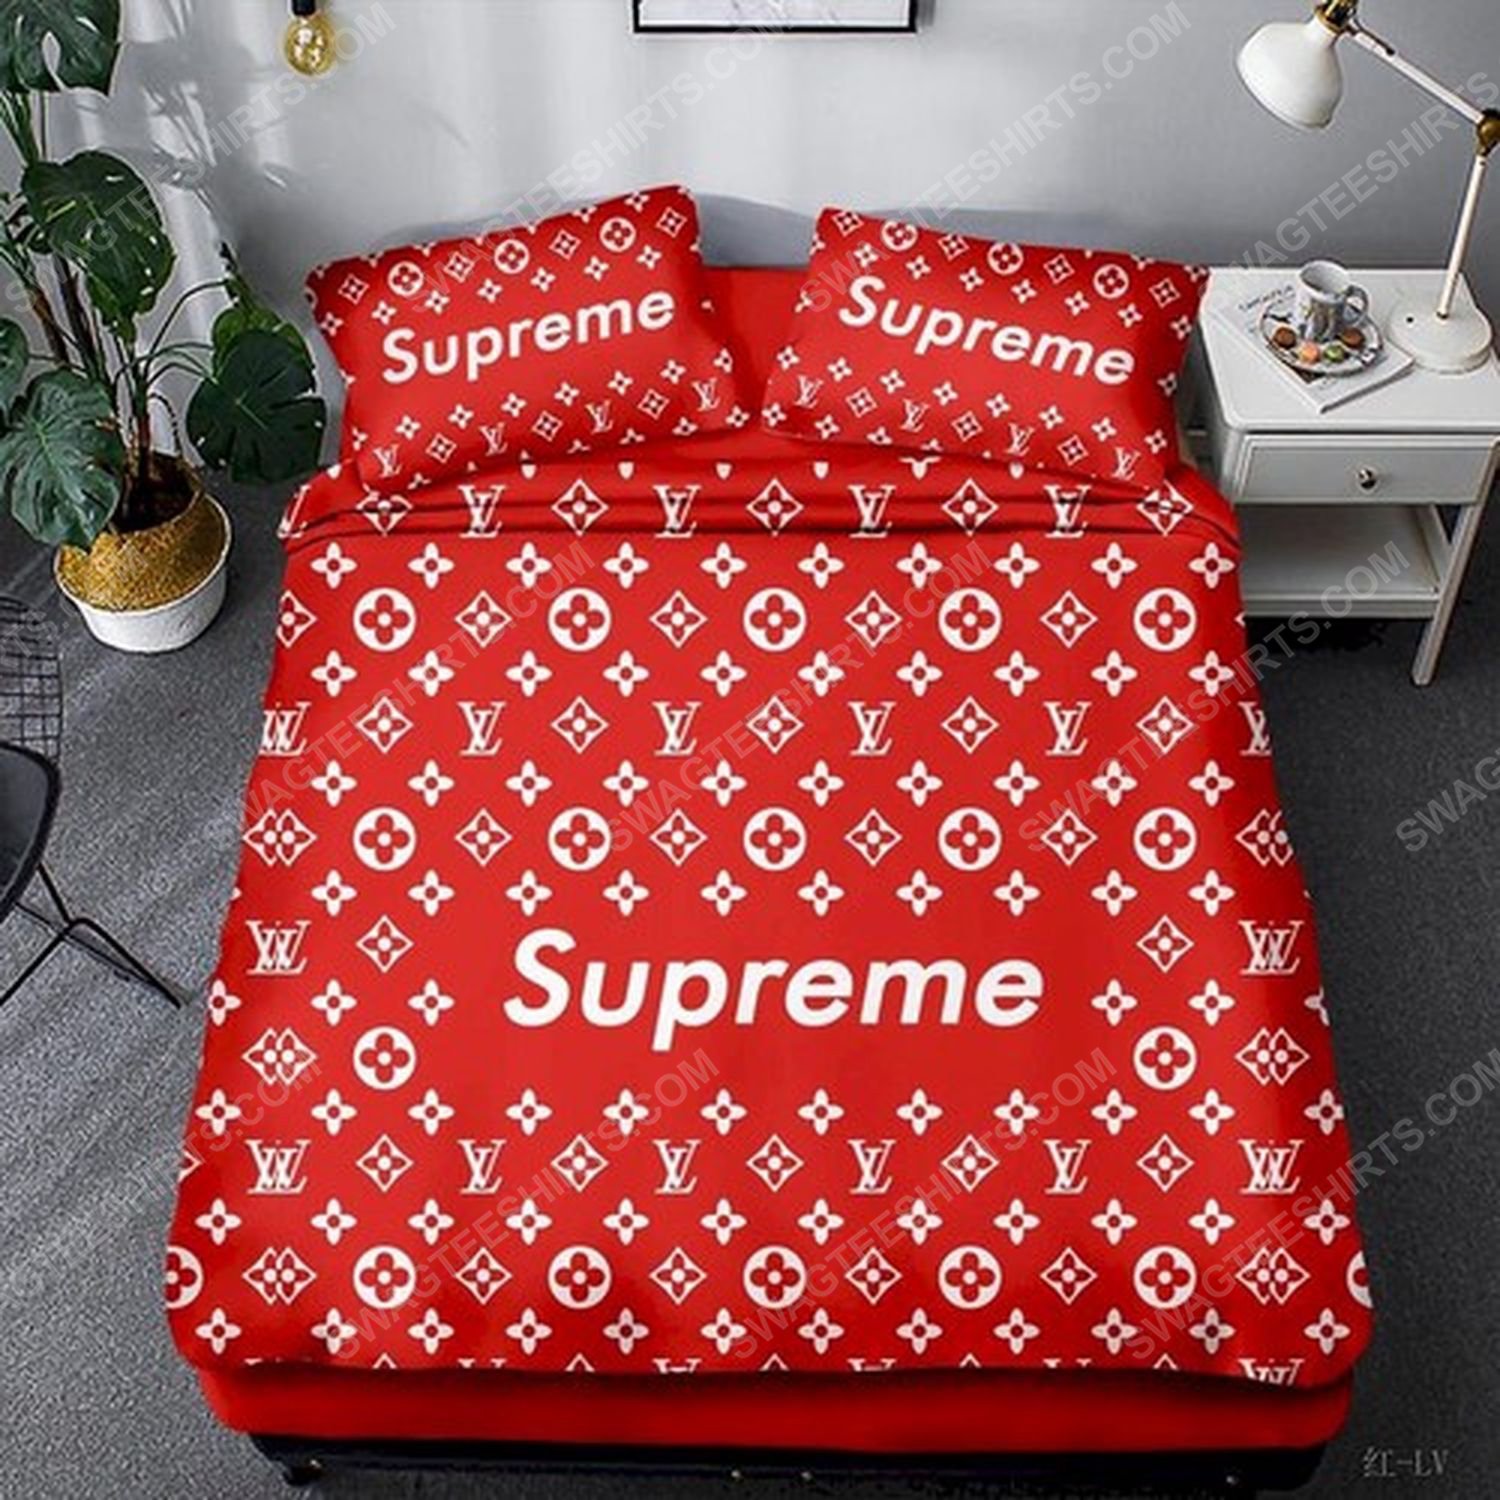 Supreme and lv monogram symbols full print duvet cover bedding set 1